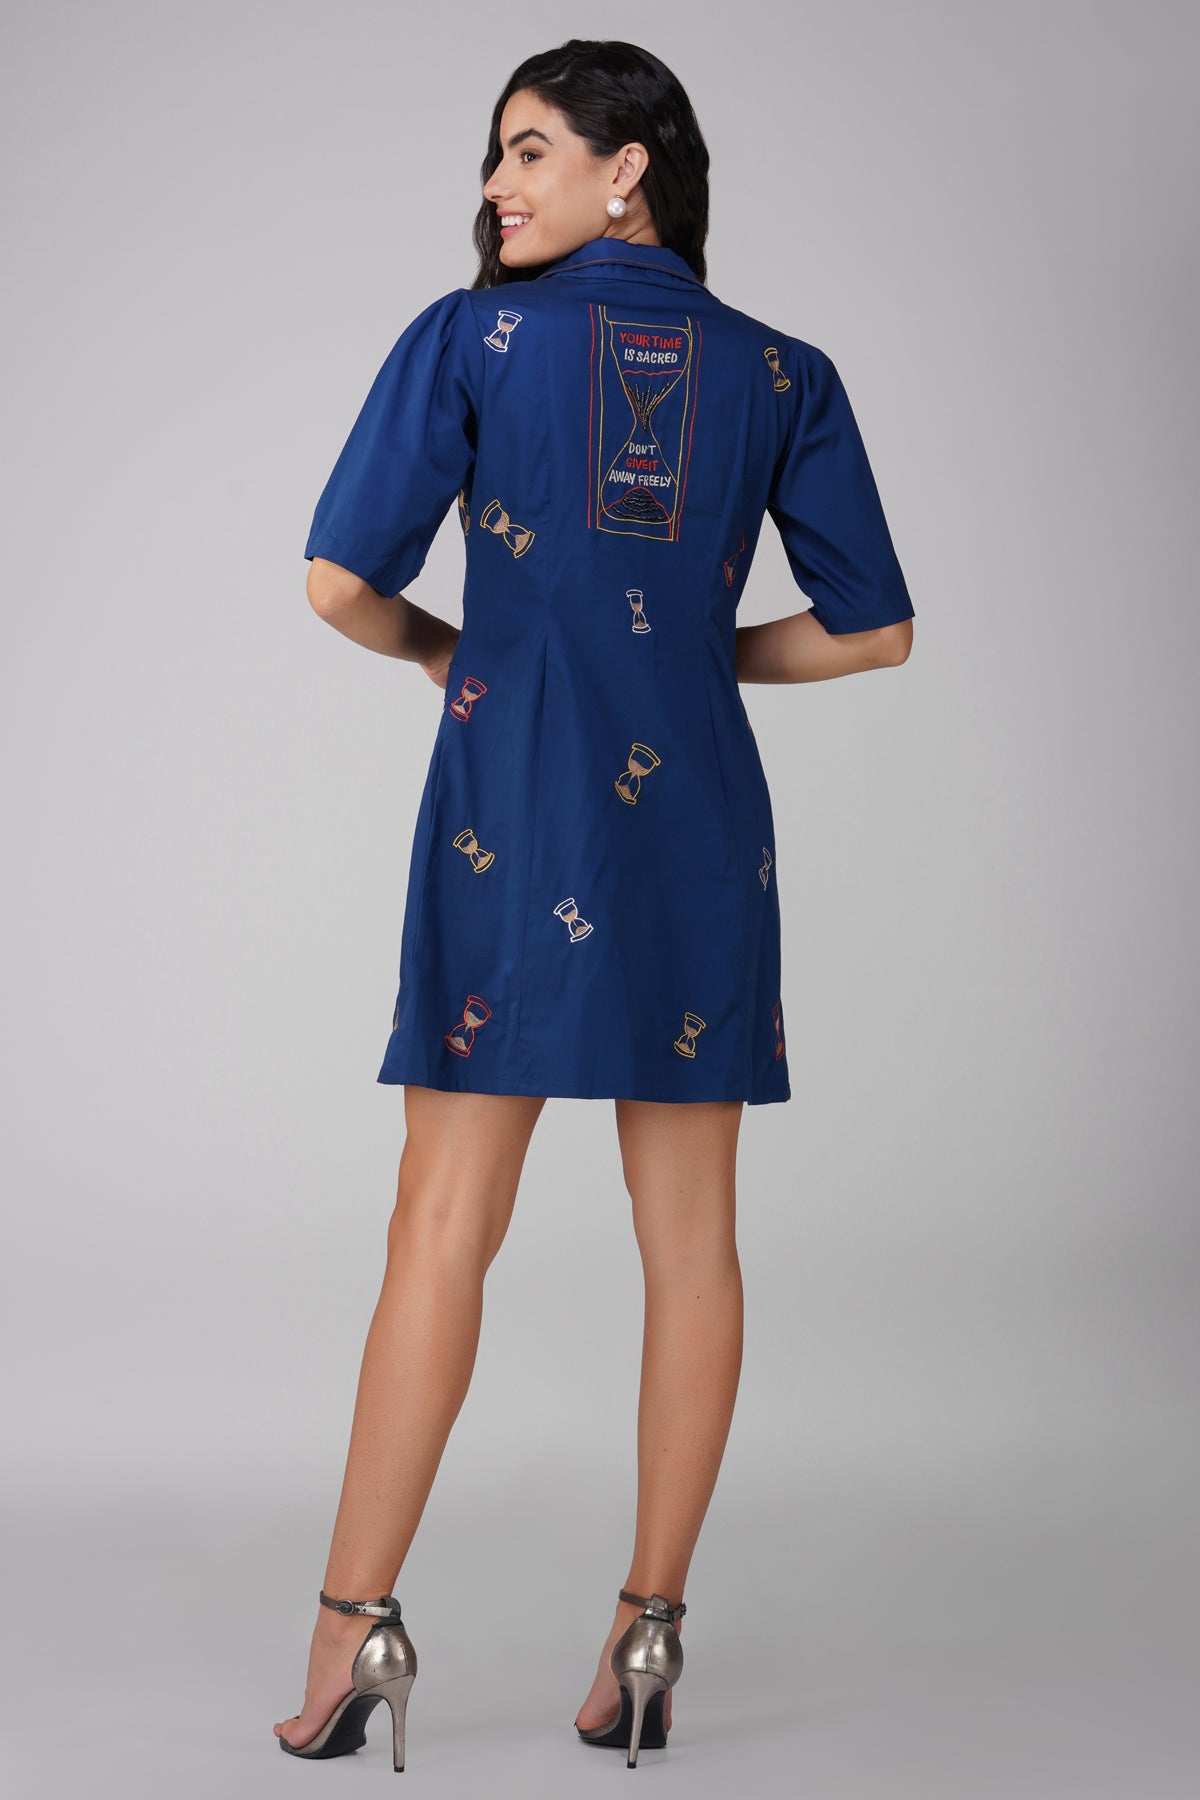 Denim Blue Hourglass Dress (Punanya Virmani)